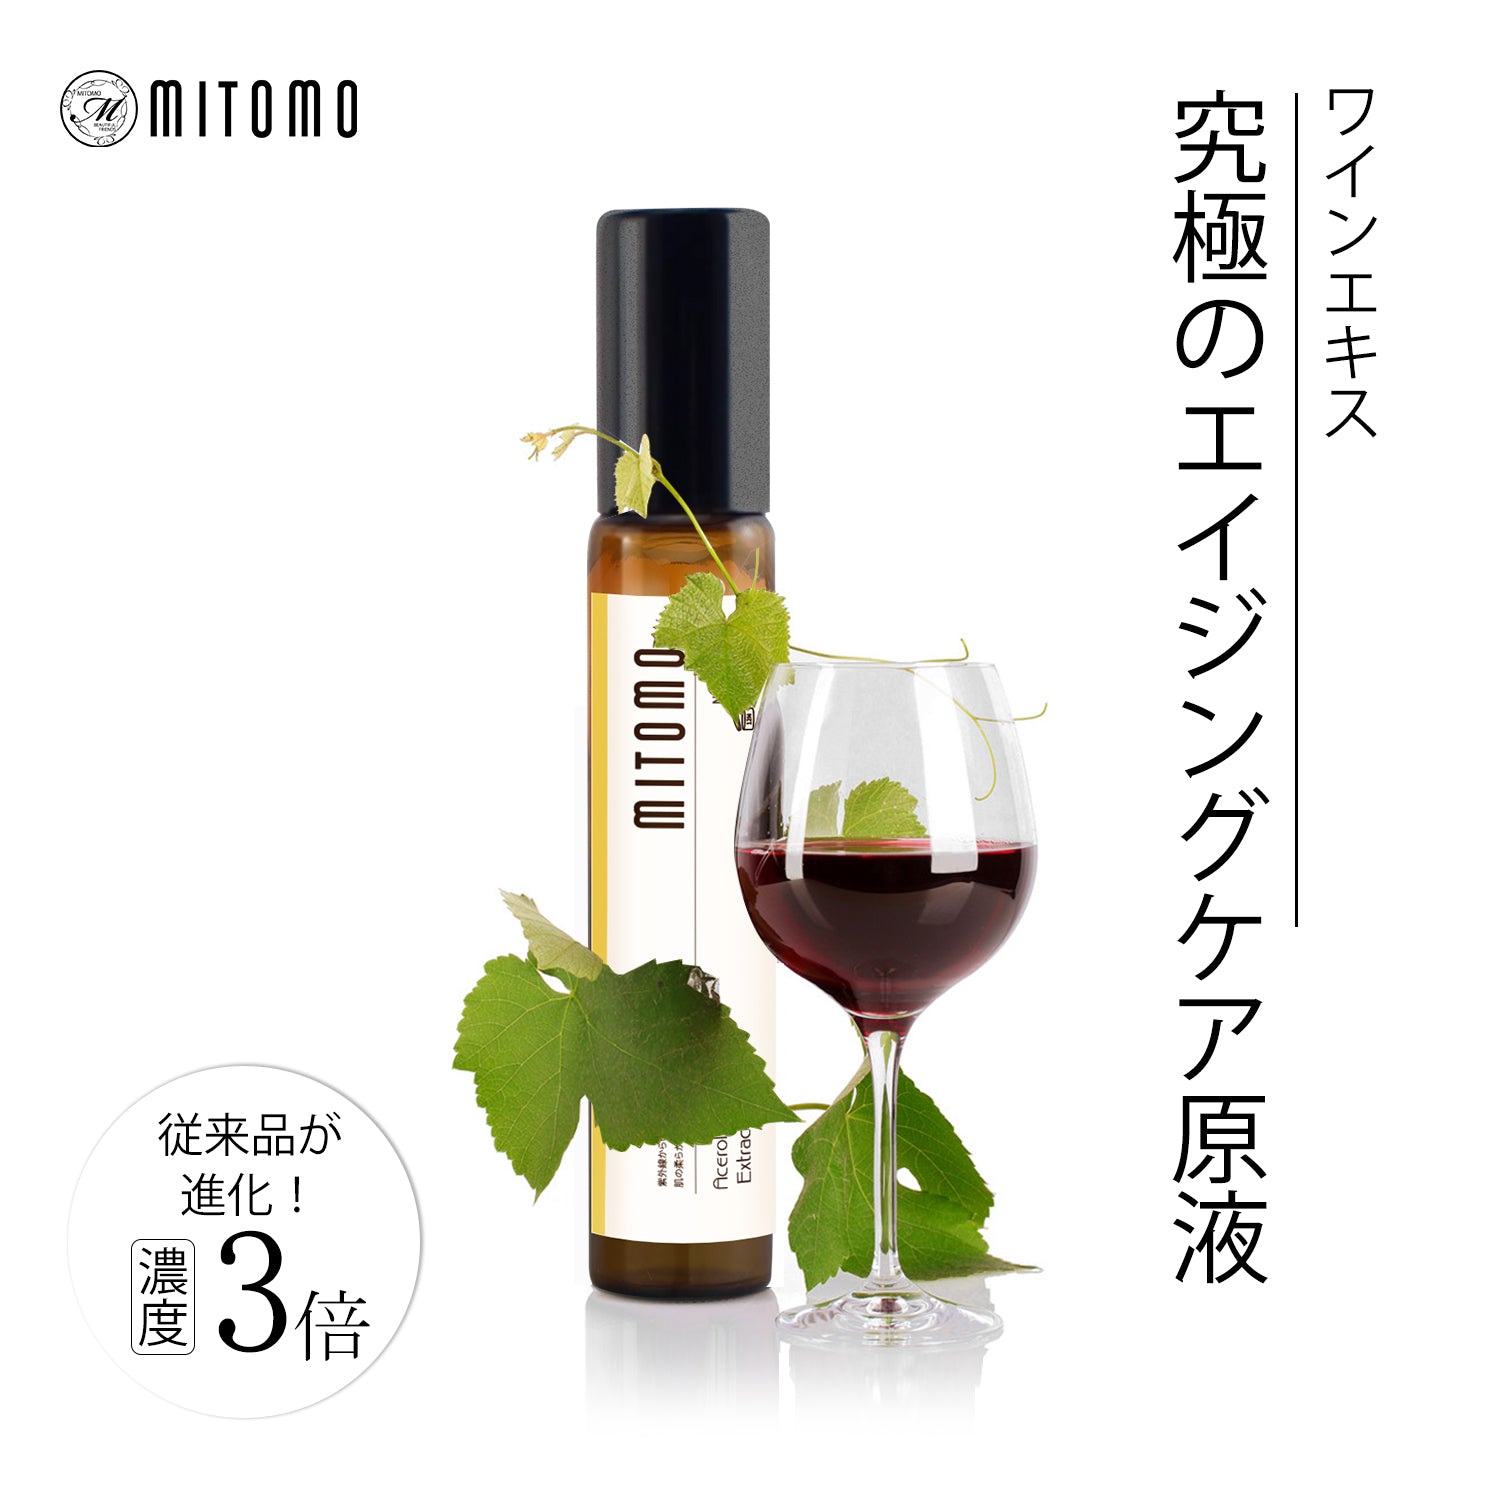 MITOMO 日本製ワインエキススキンケア 潤い 保湿 フアンペアボトル10mlエキス【EXSA00001-24-010】